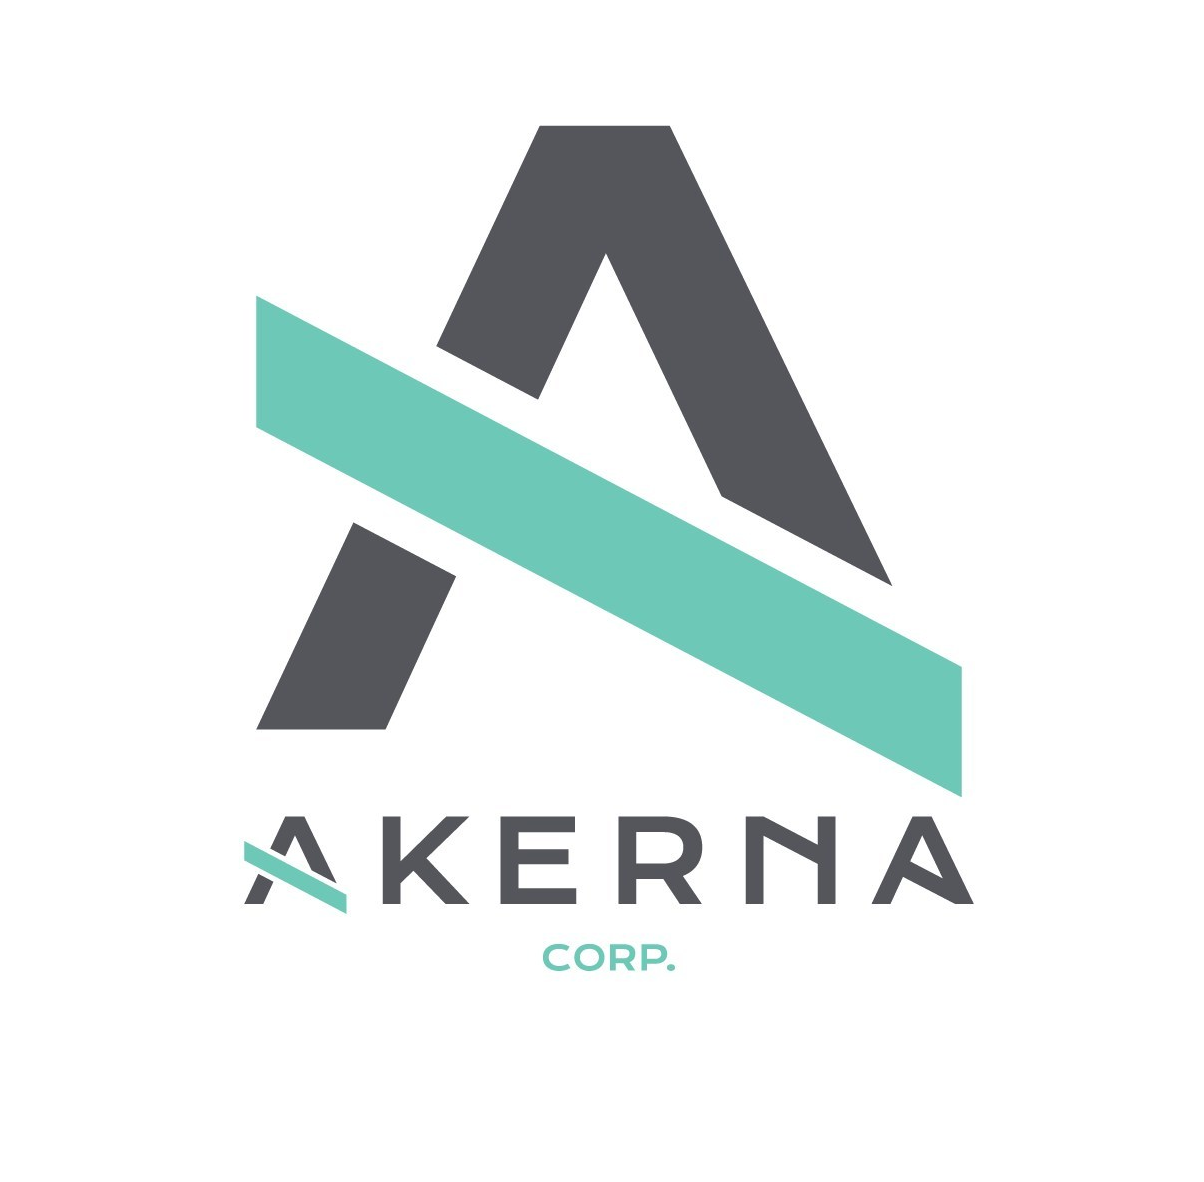 Akerna Corp